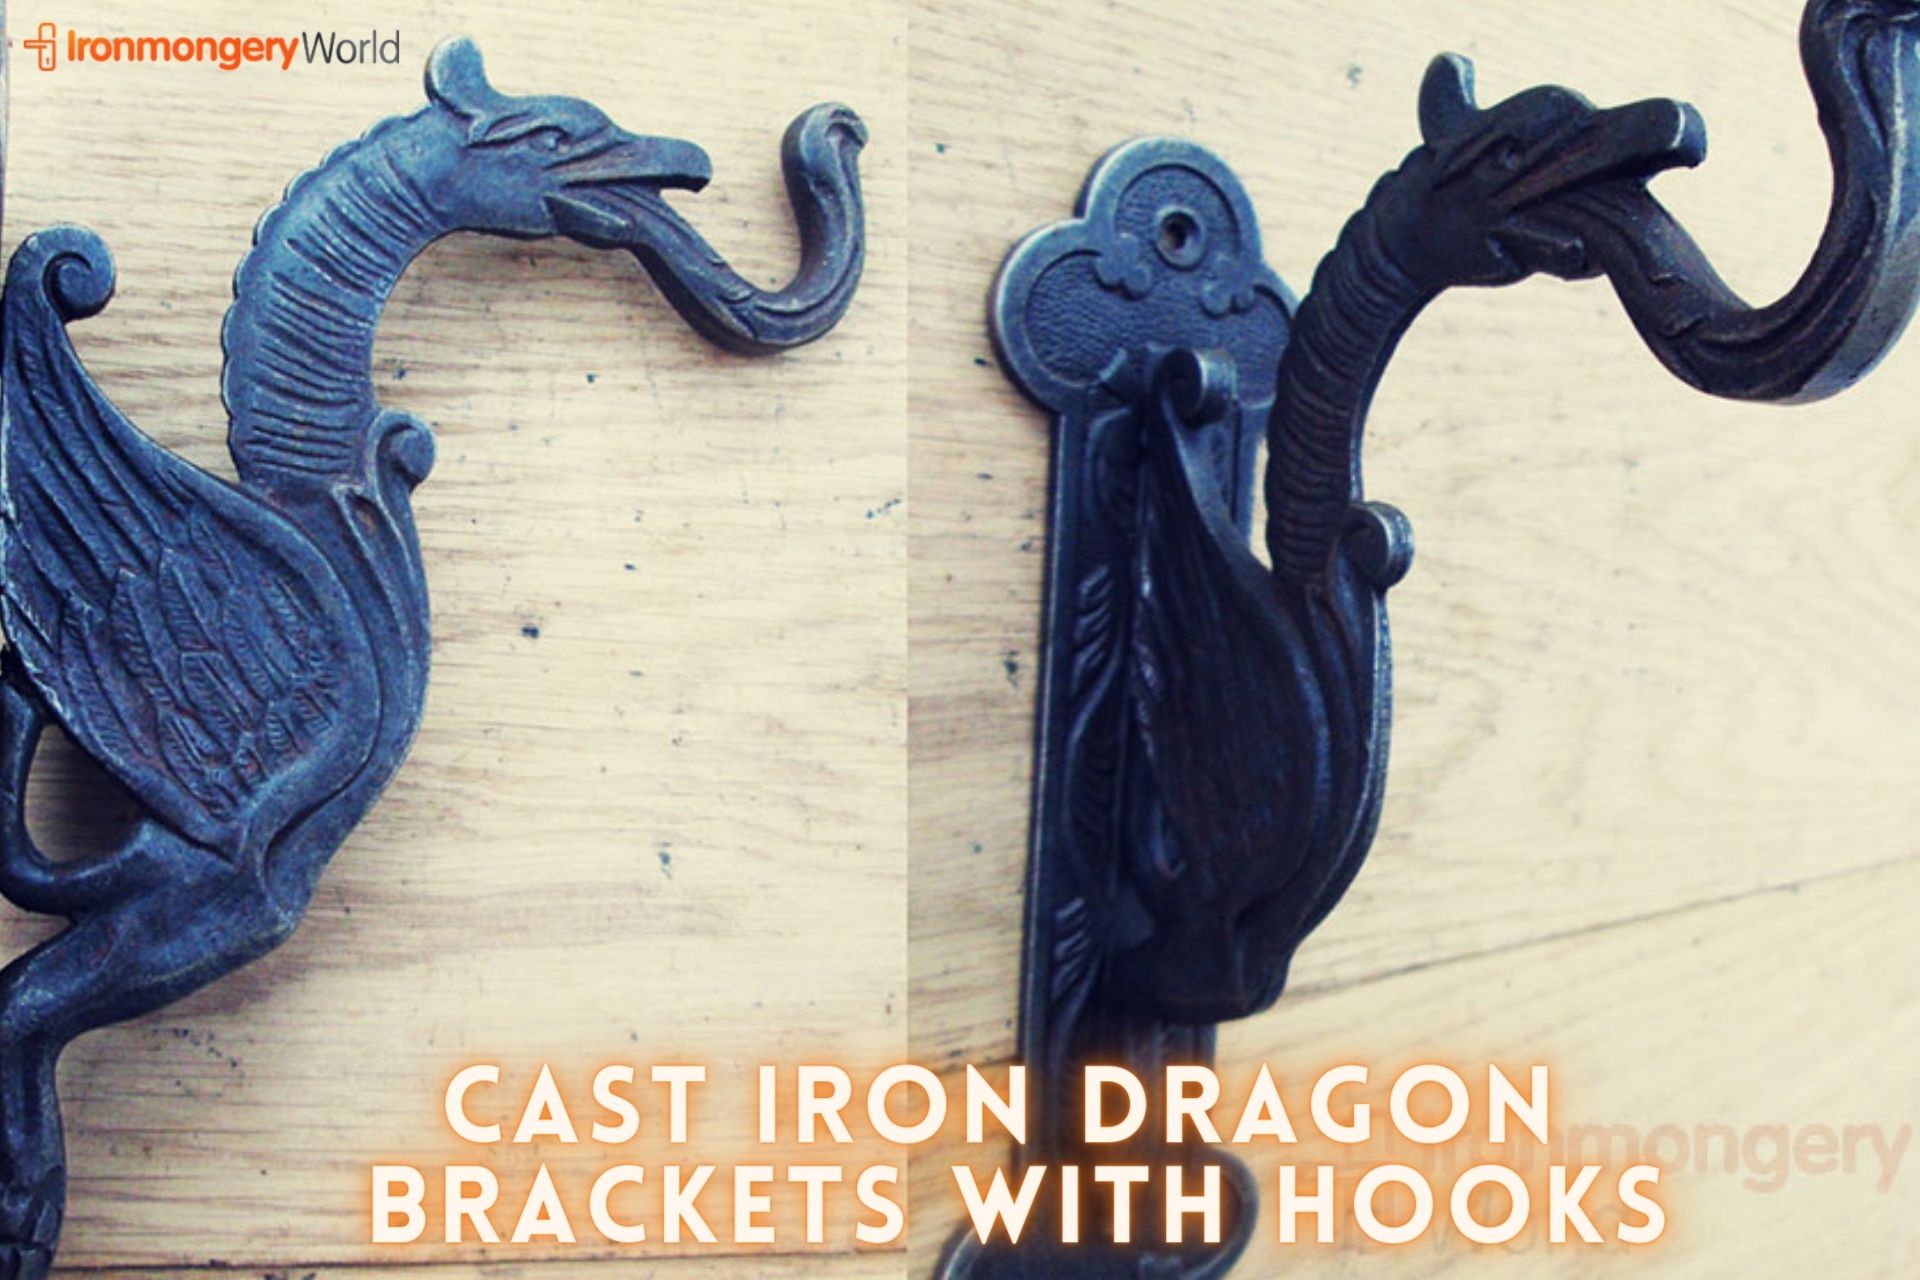 CAST IRON DRAGON BRACKETS WITH HOOKS